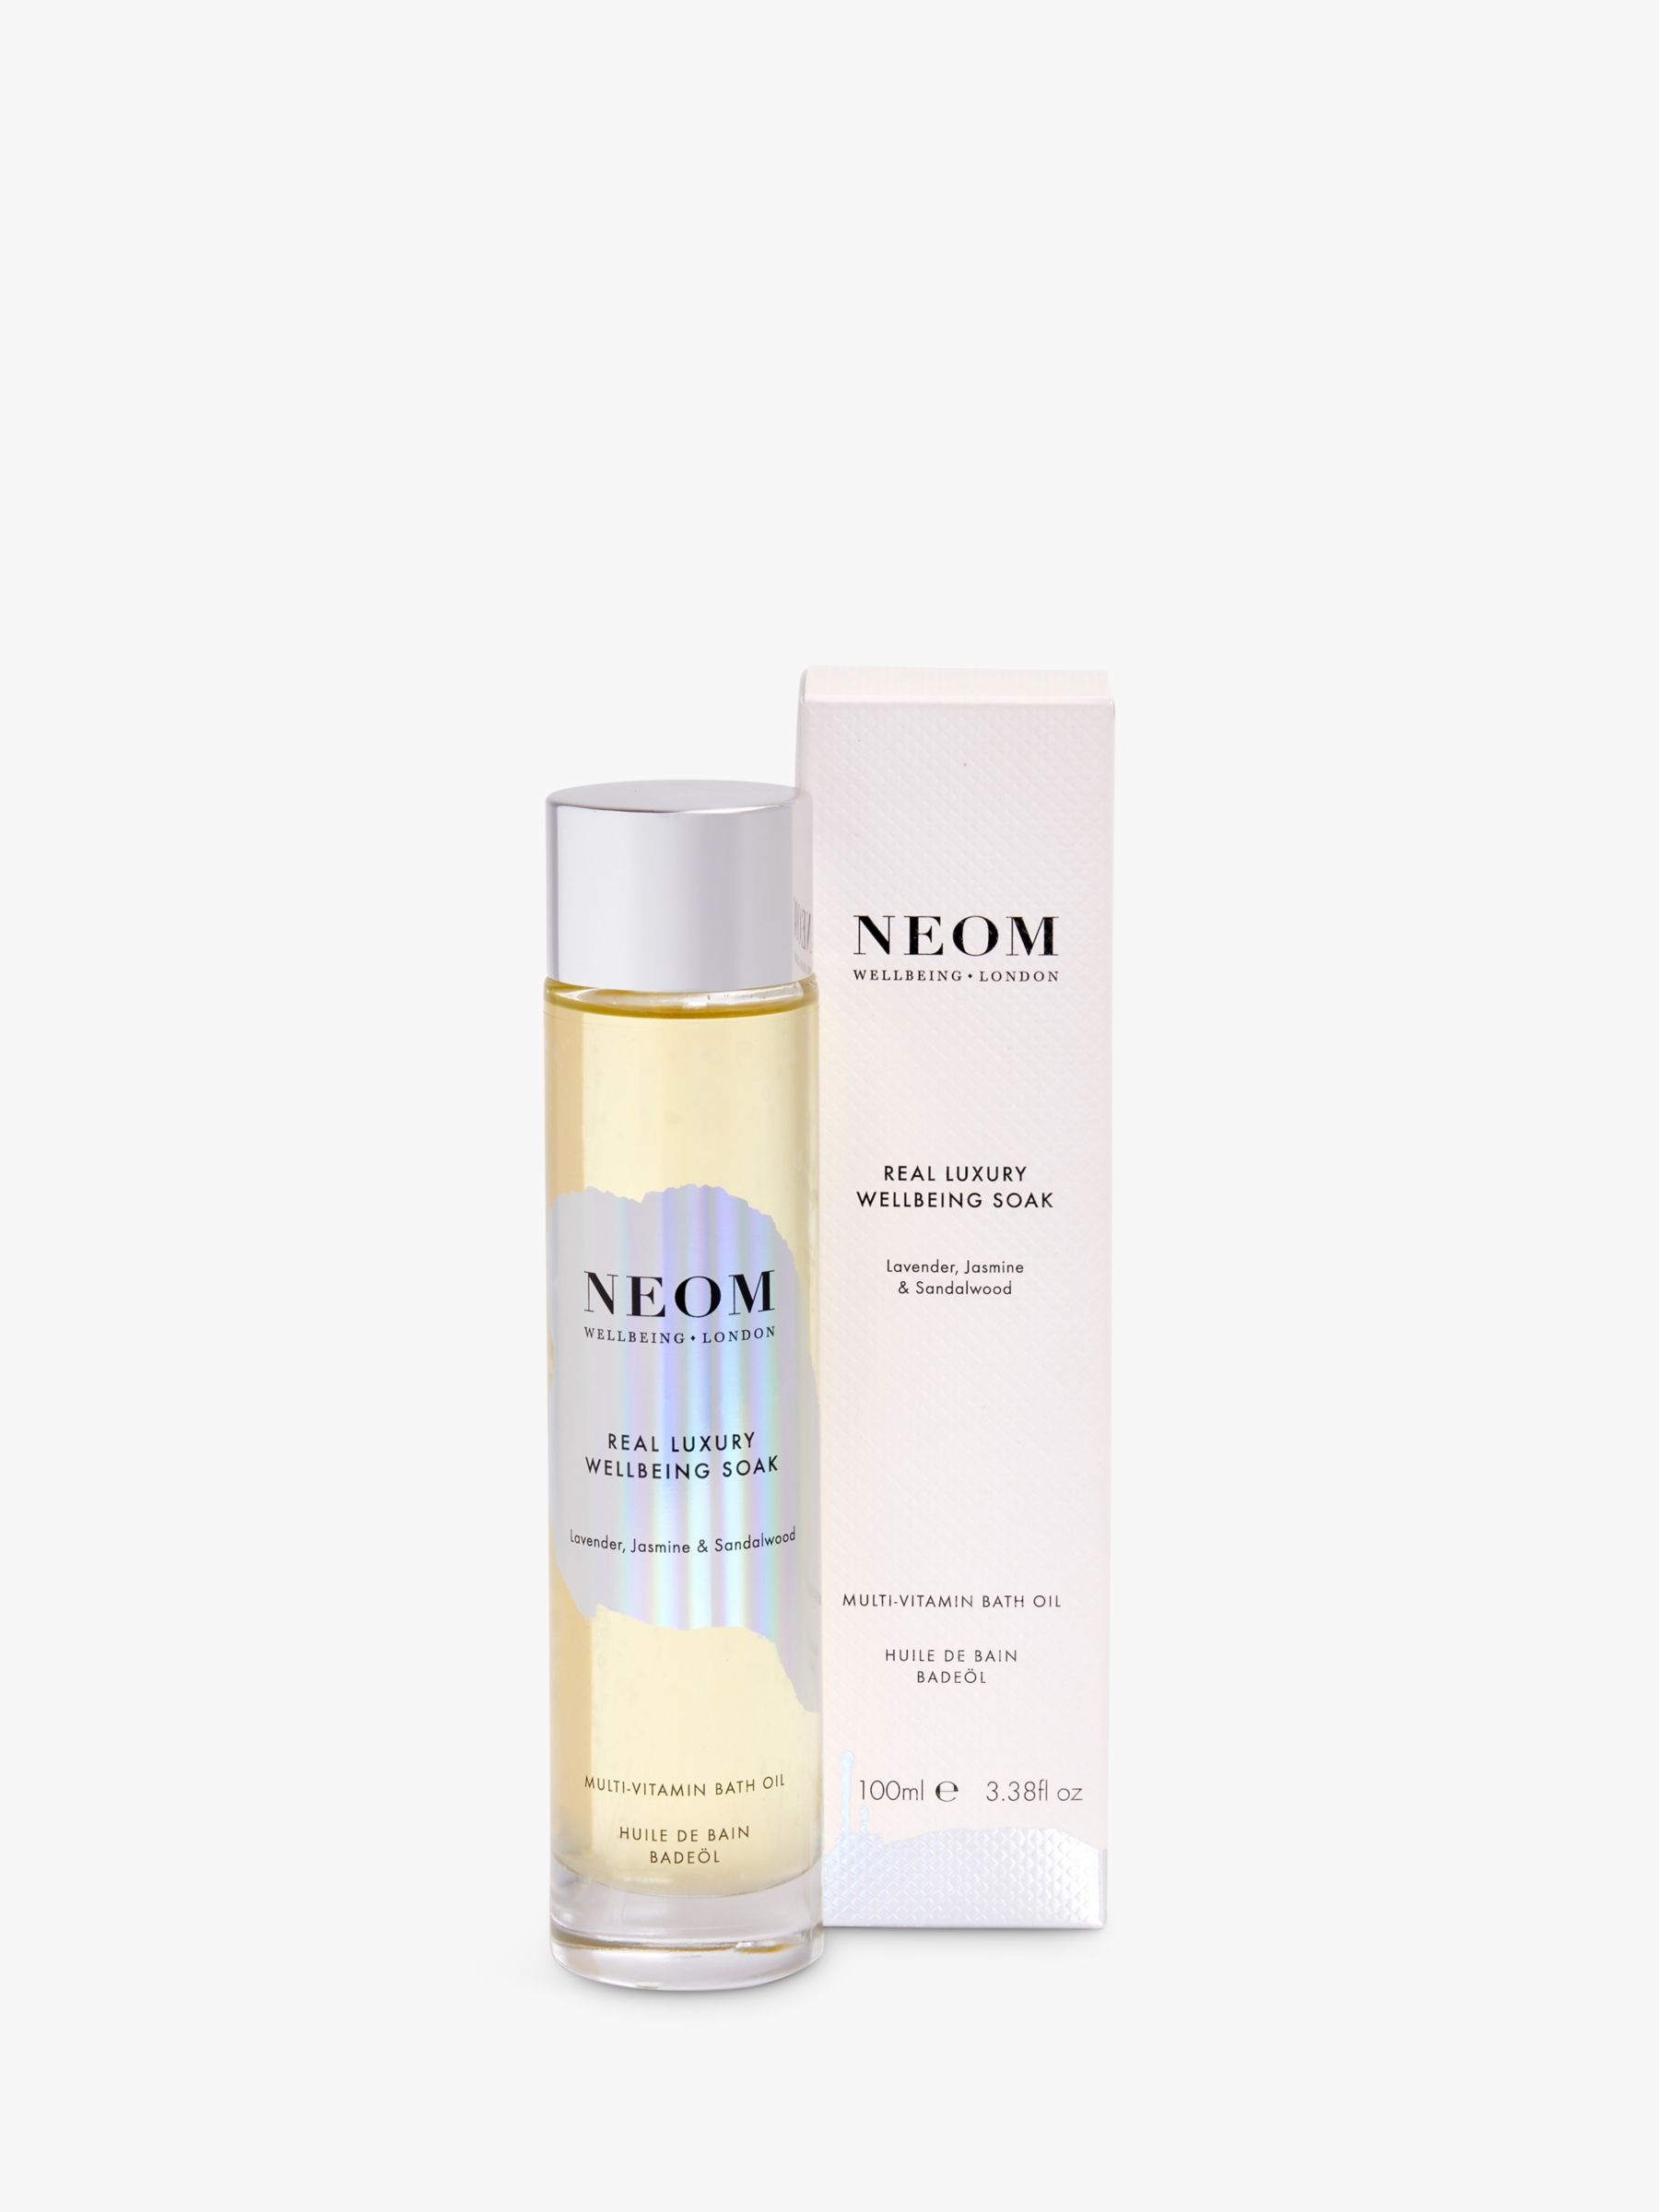 Neom Organics London Real Luxury Wellbeing Soak, 100ml